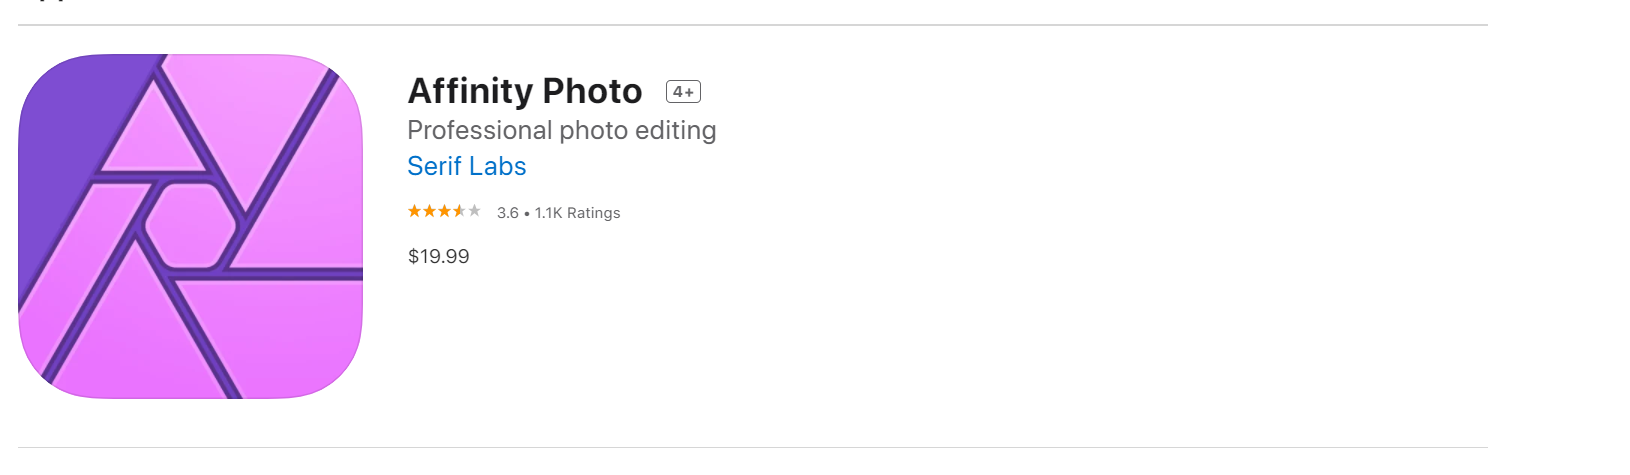 affinity photo apps store - Adobe Photoshop per iPad e Affinity Photo per iPad: qual è il migliore?